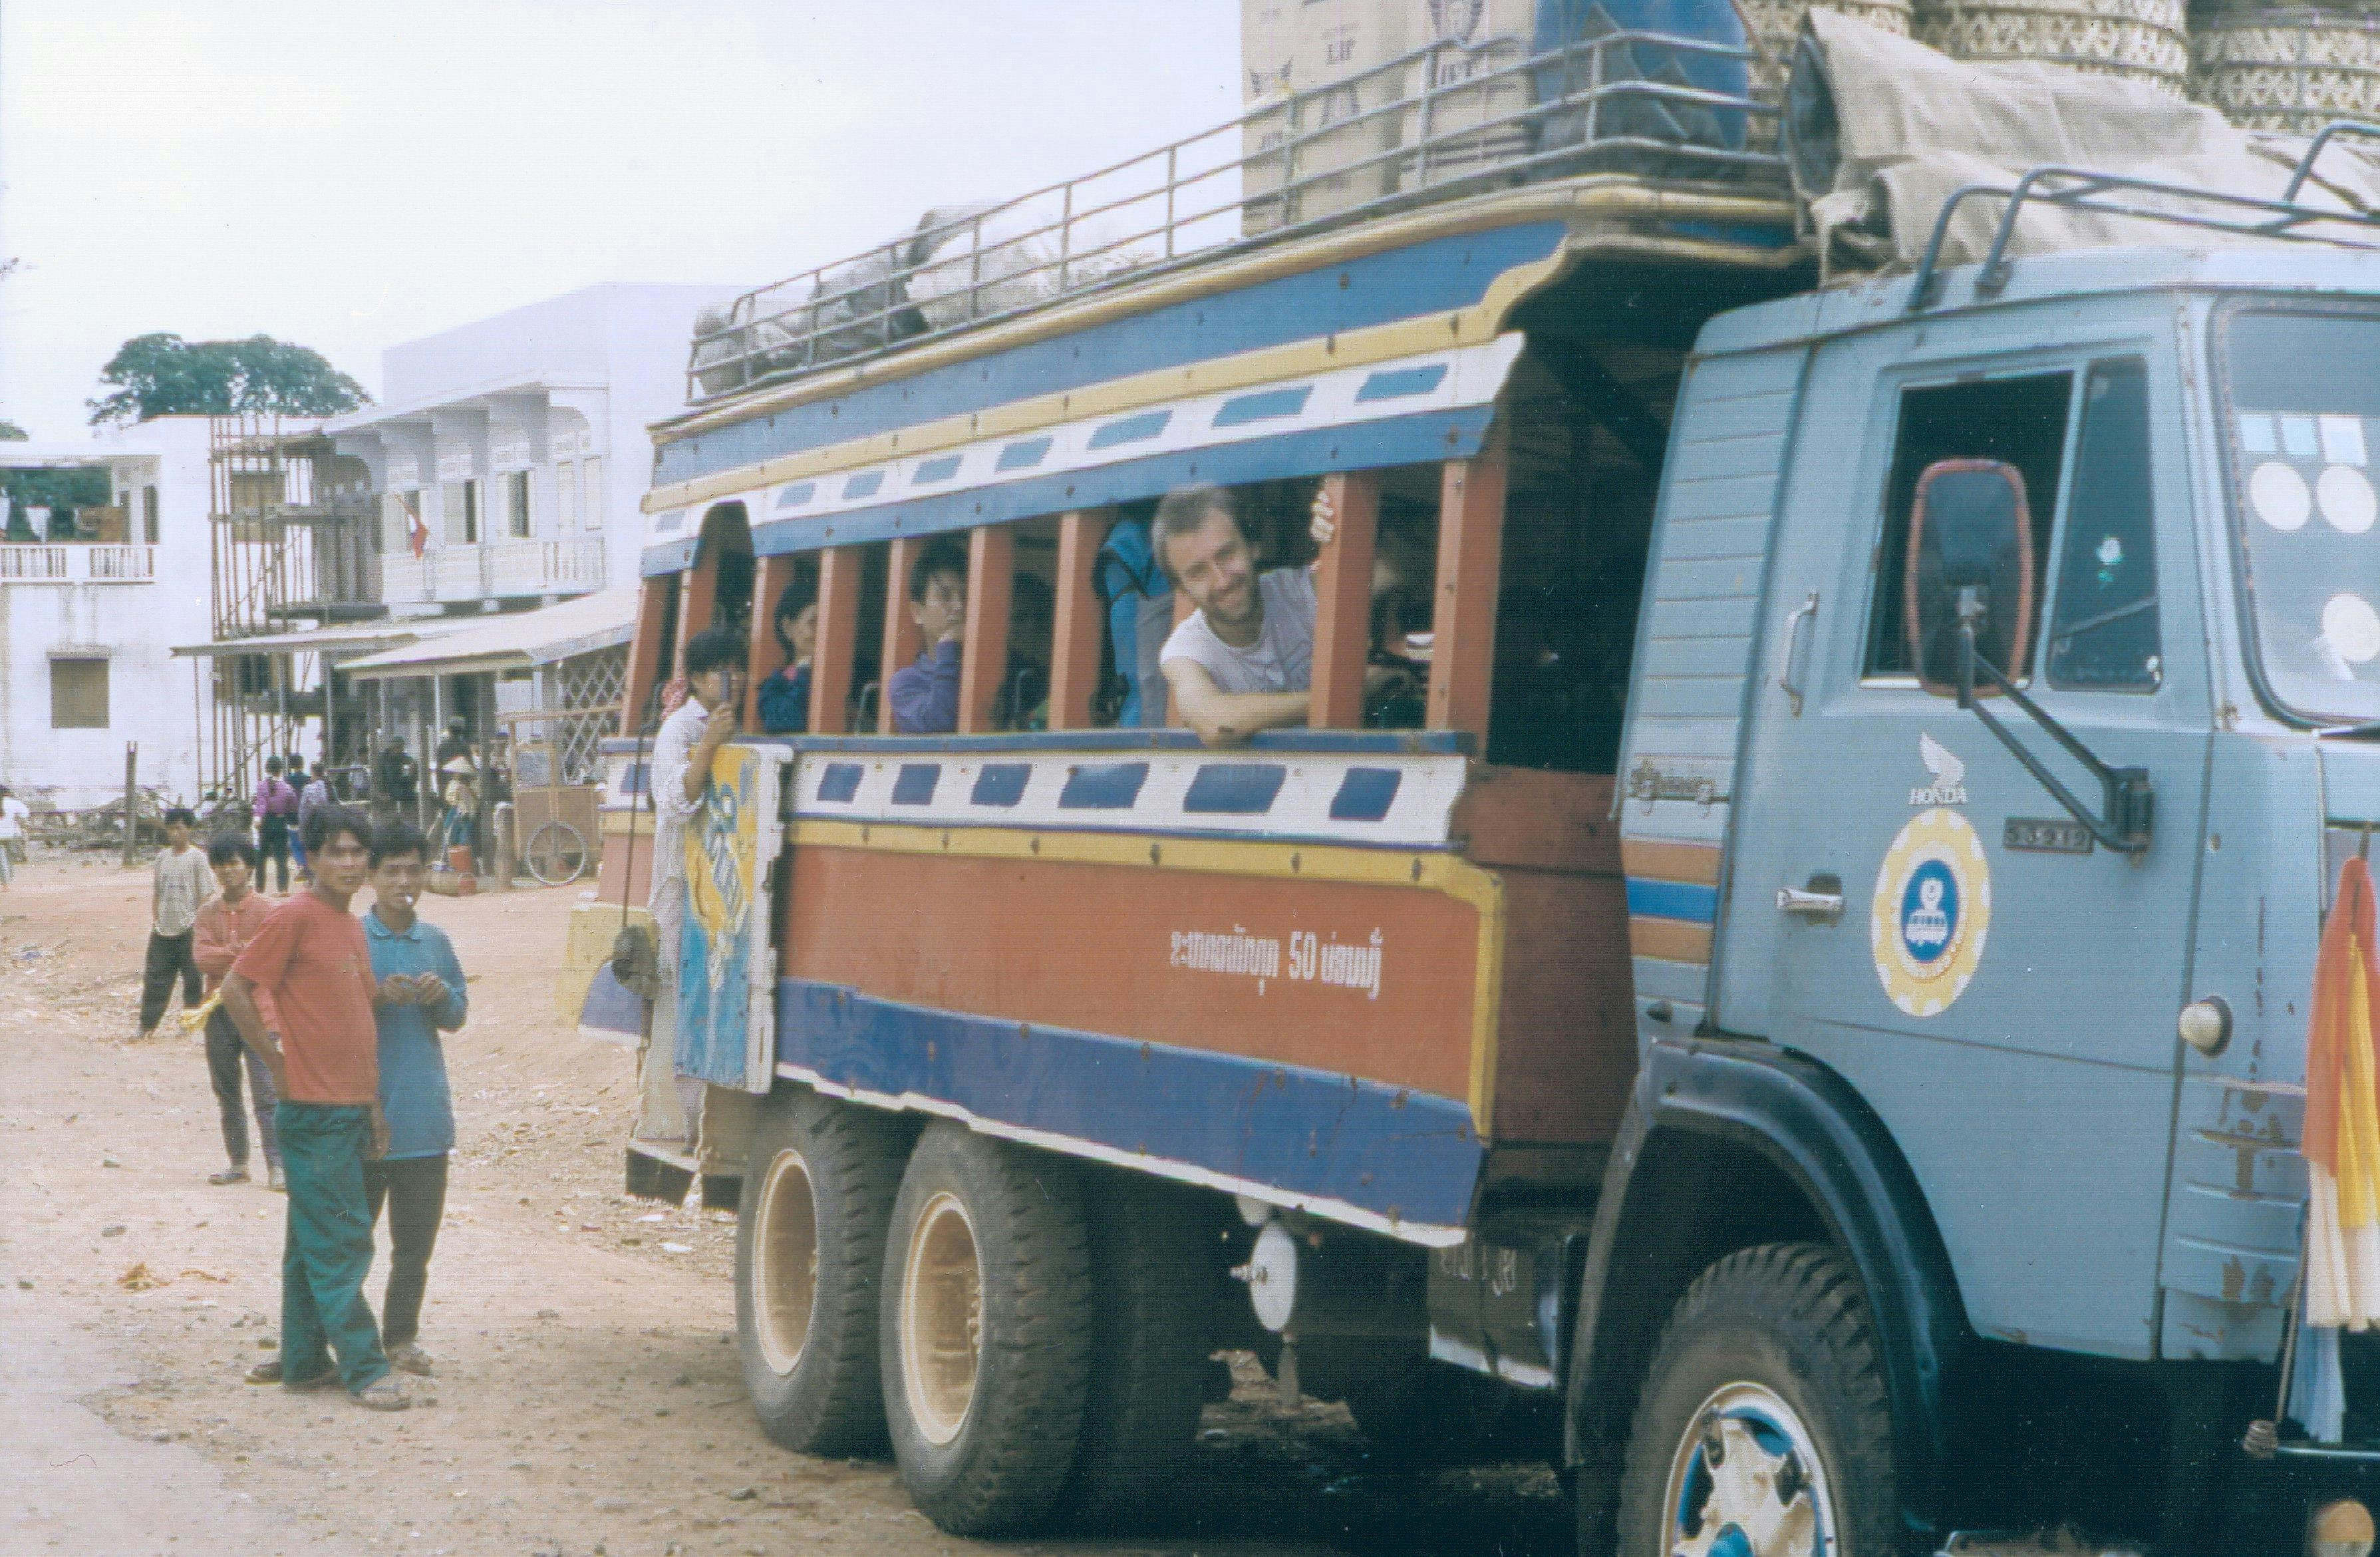 Boarding a truck-turned-bus in Laos (1994)